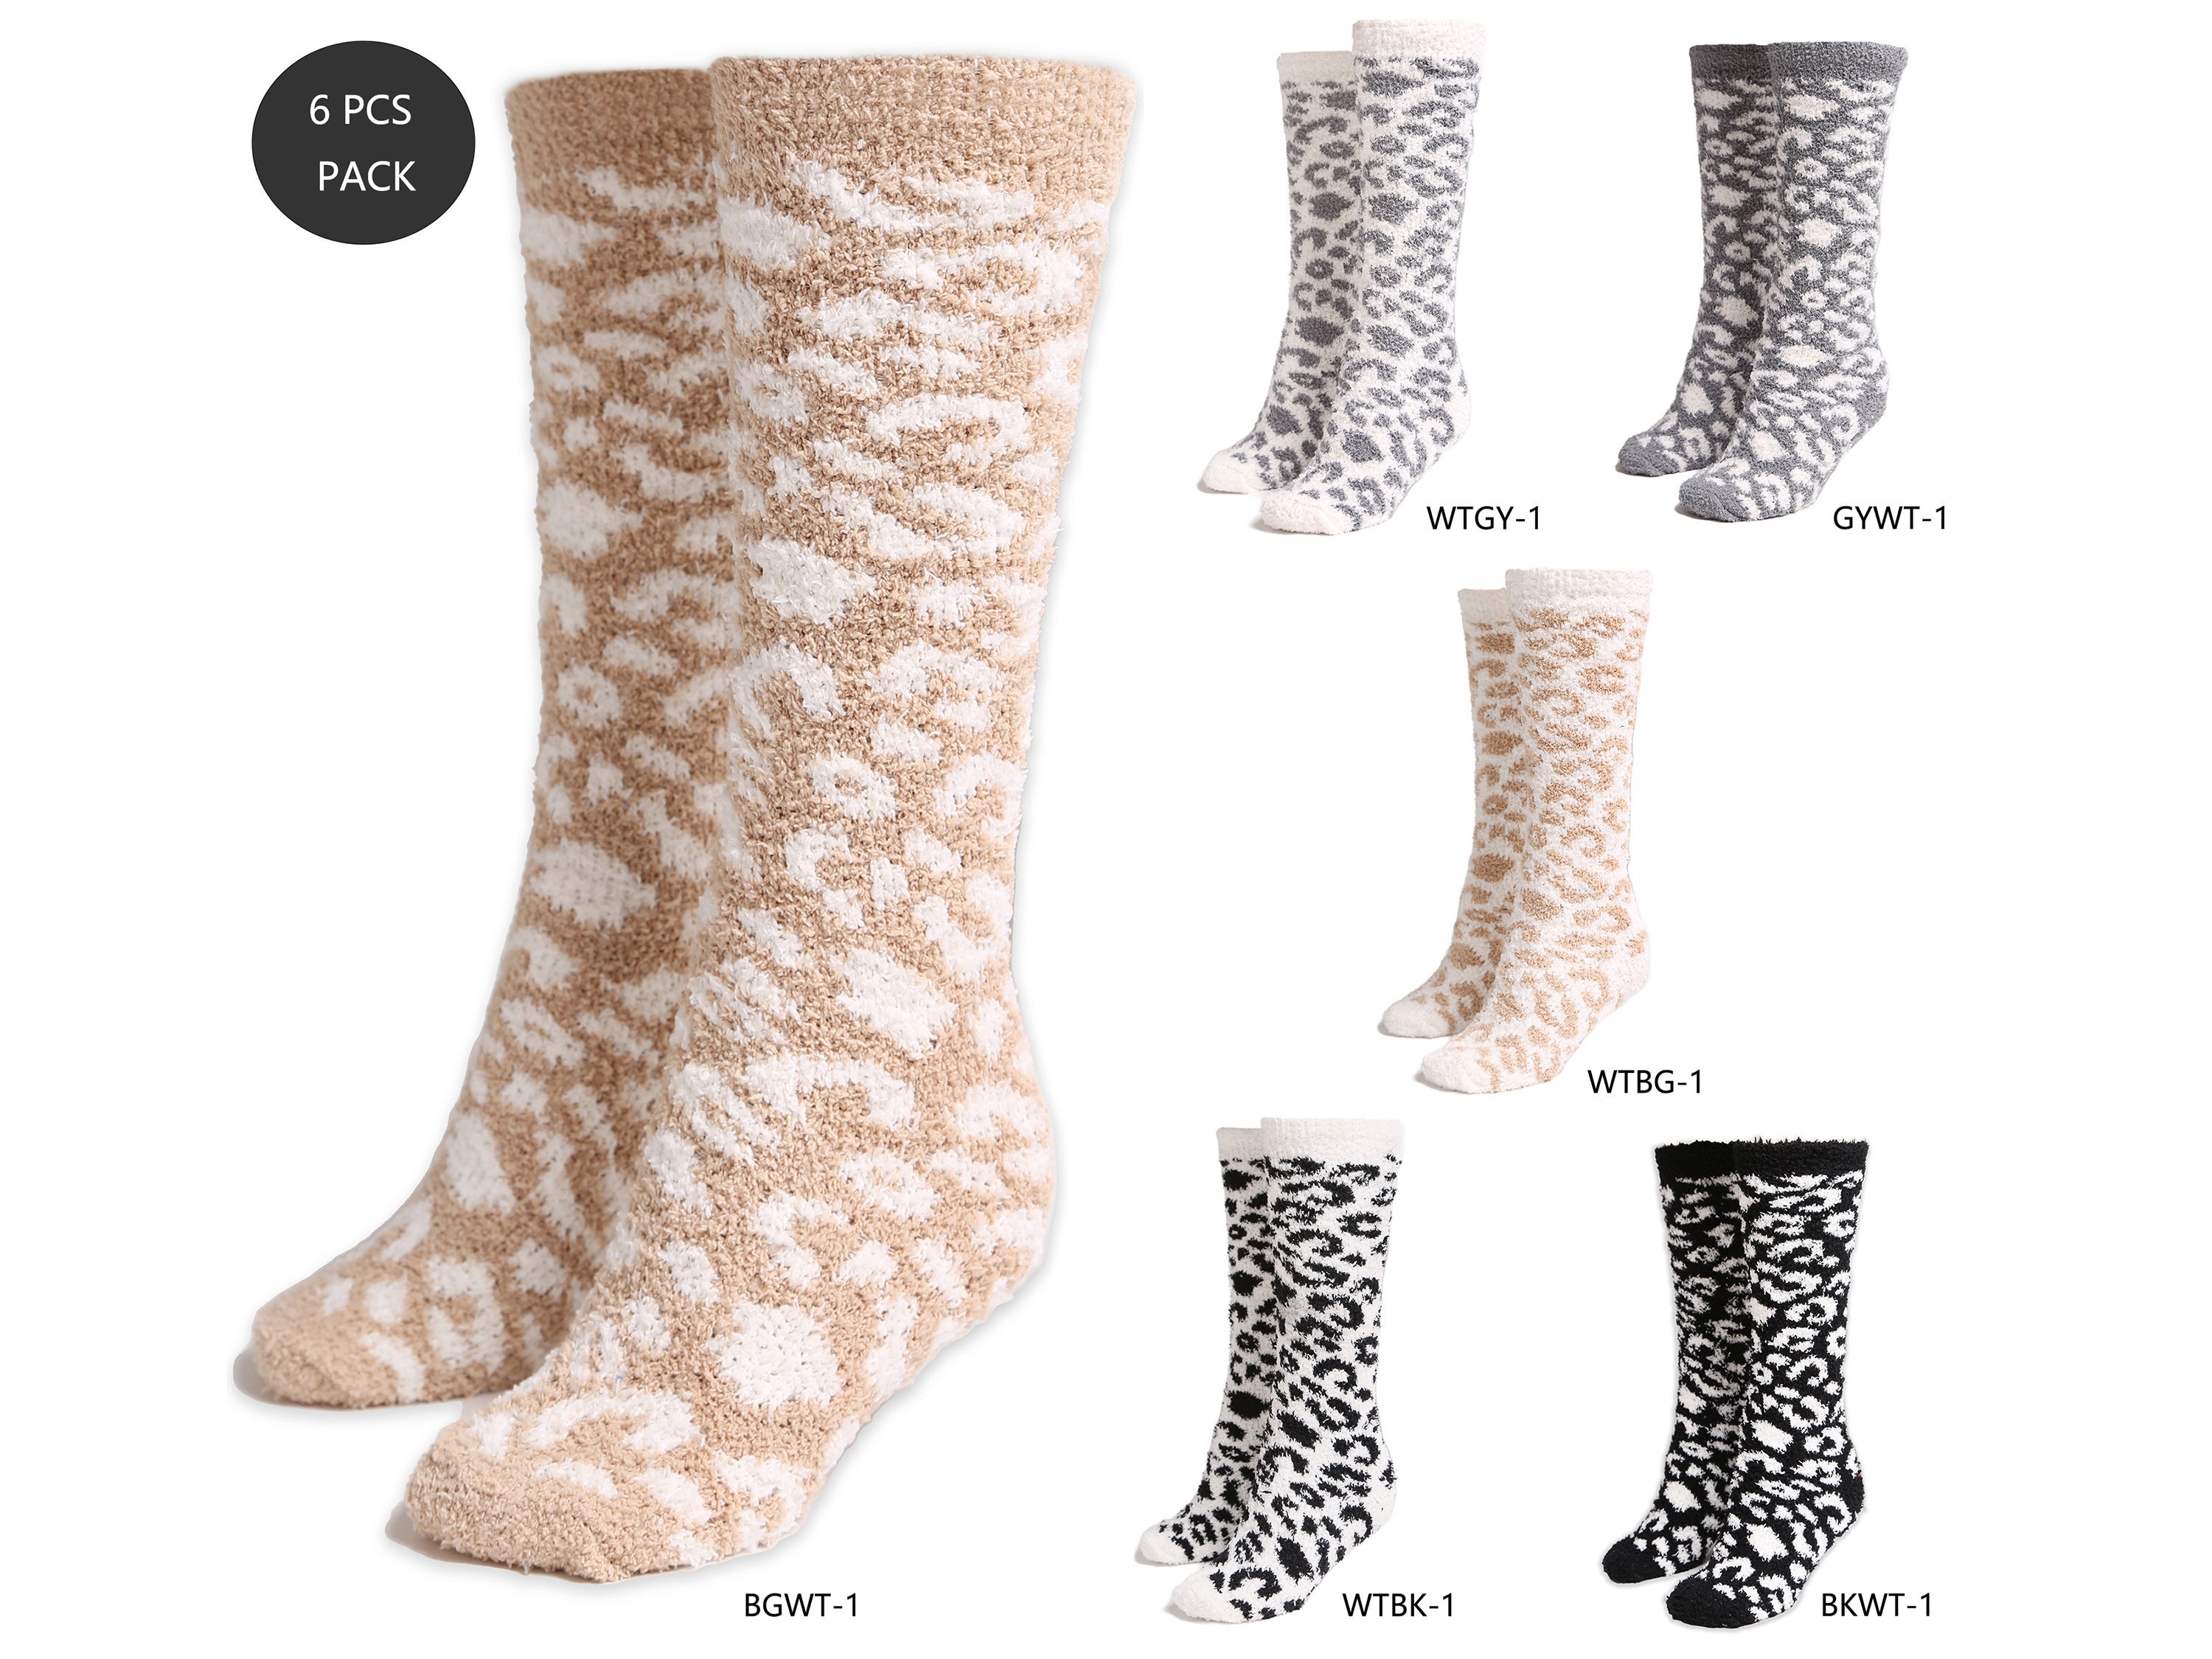 Barefoot Dreams Womens Leopard Socks - Cream/Stone